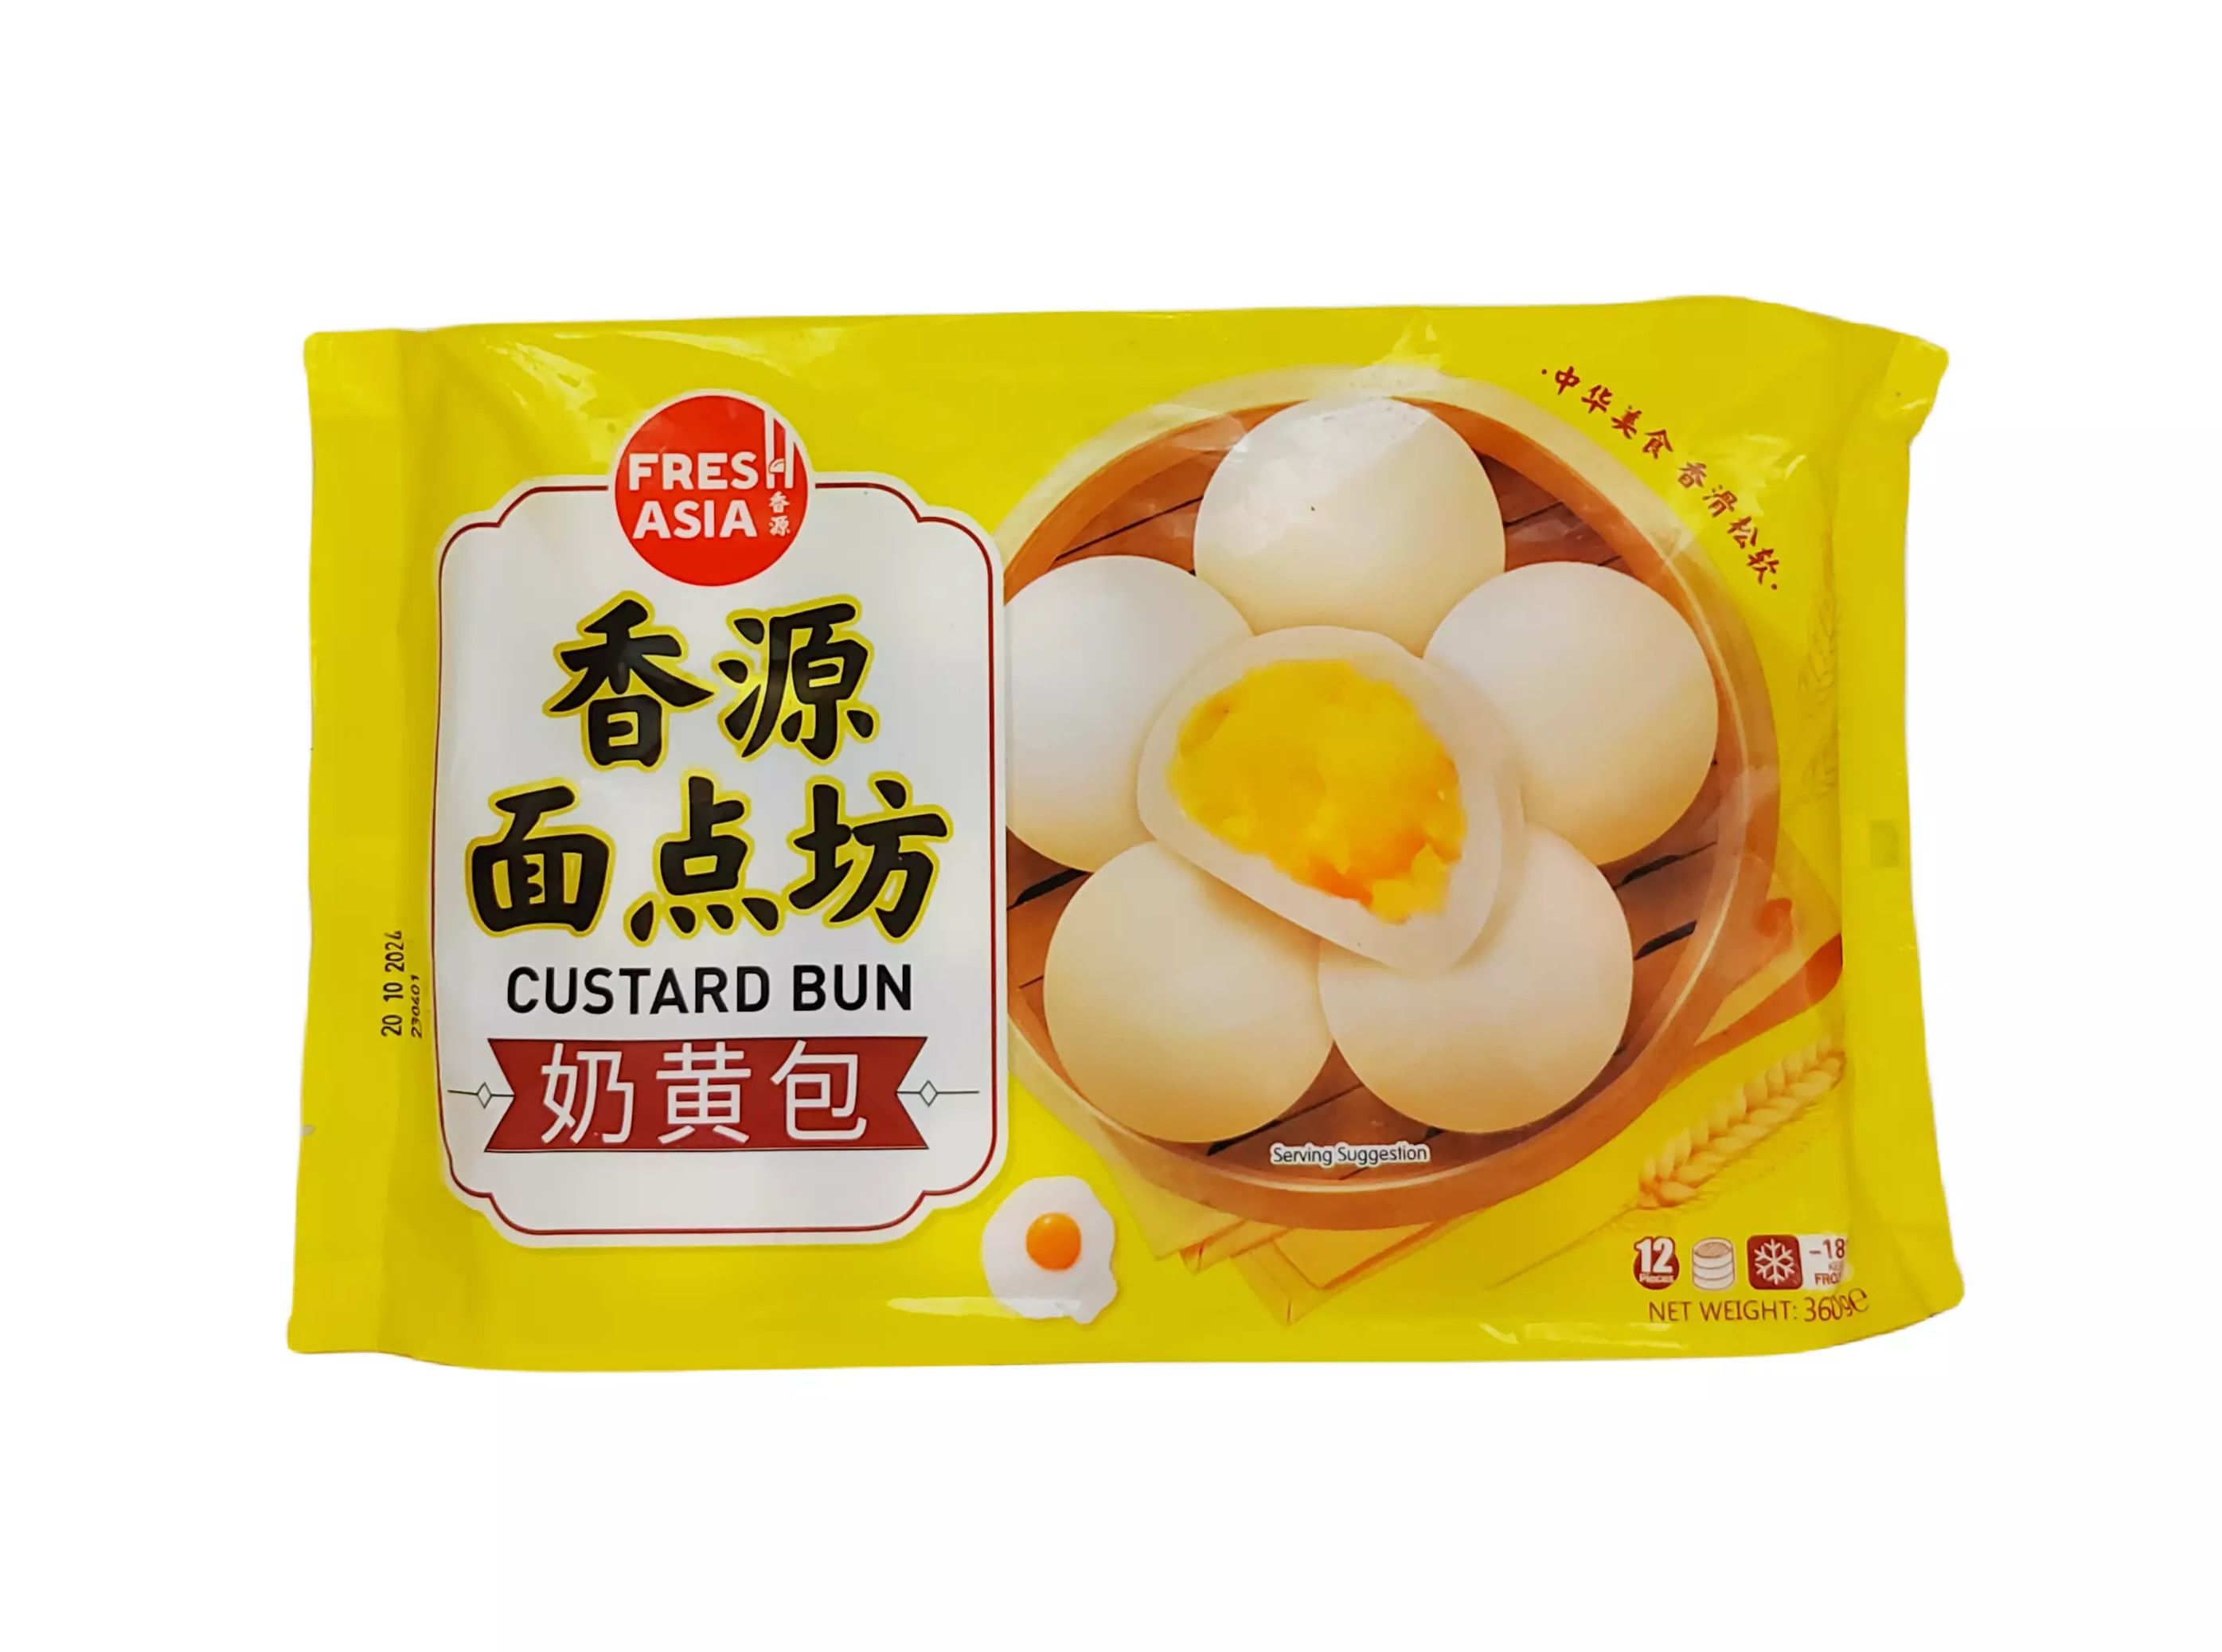 Custard Bun Fryst 360g Freshasia Kina